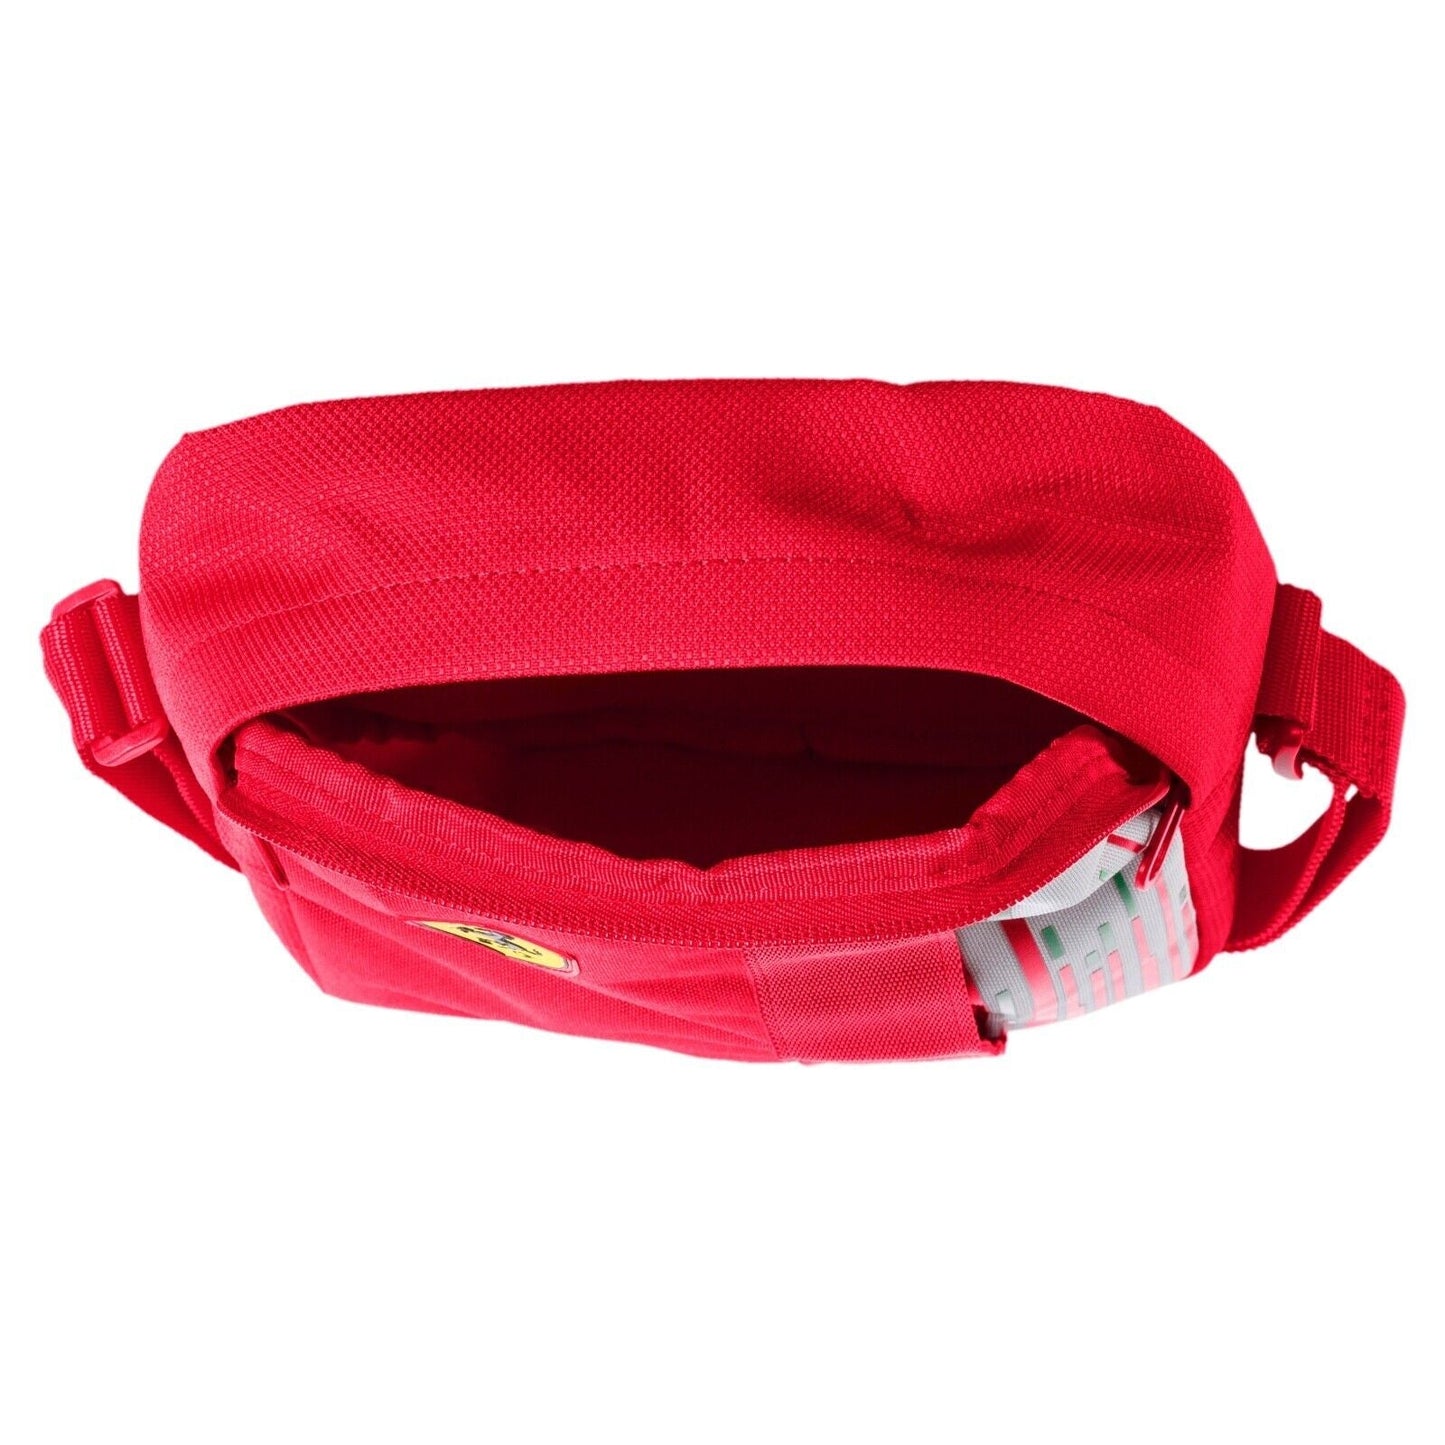 Scuderia Ferrari Portable Shoulder Bag - 075203 01